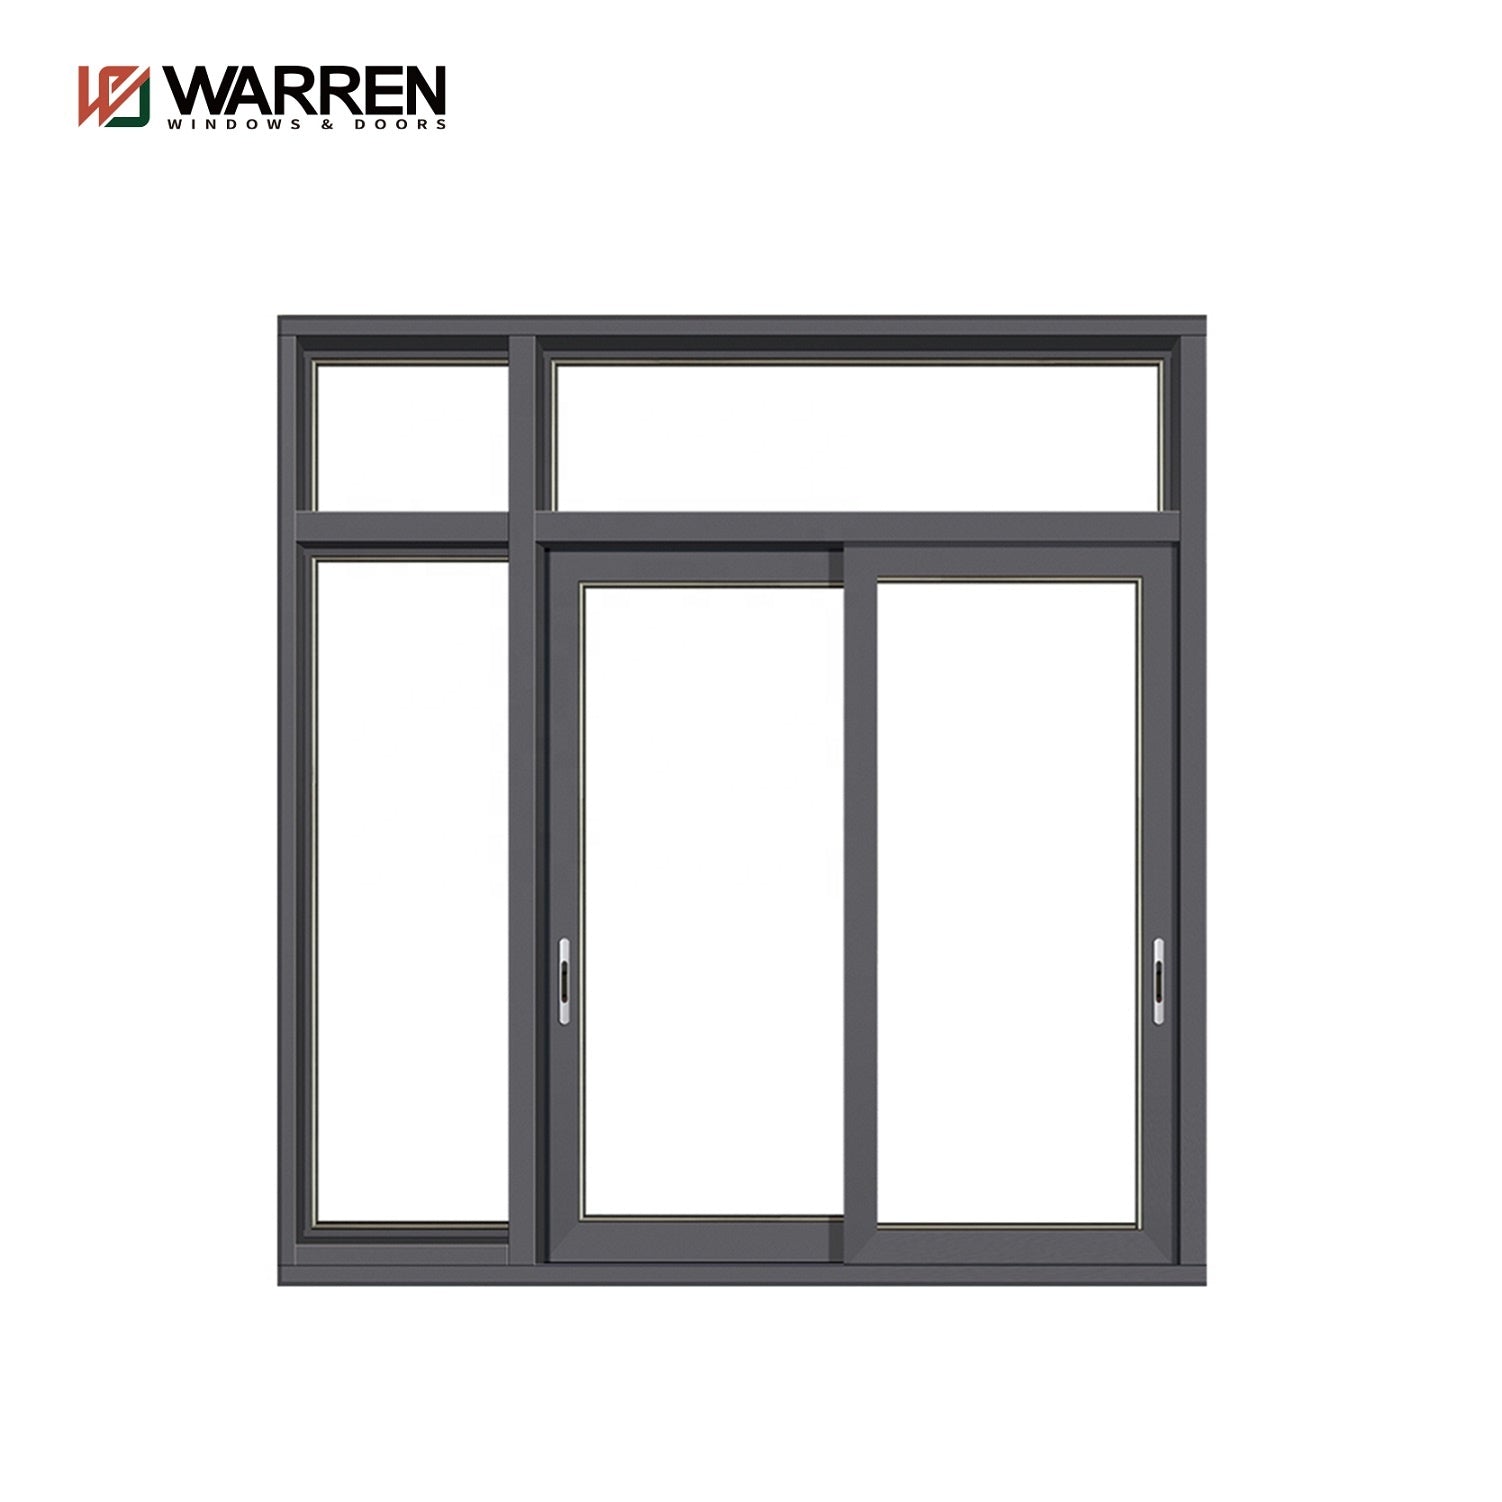 Warren 8 x 5 ft sliding window three panels design aluminum sliding windows price